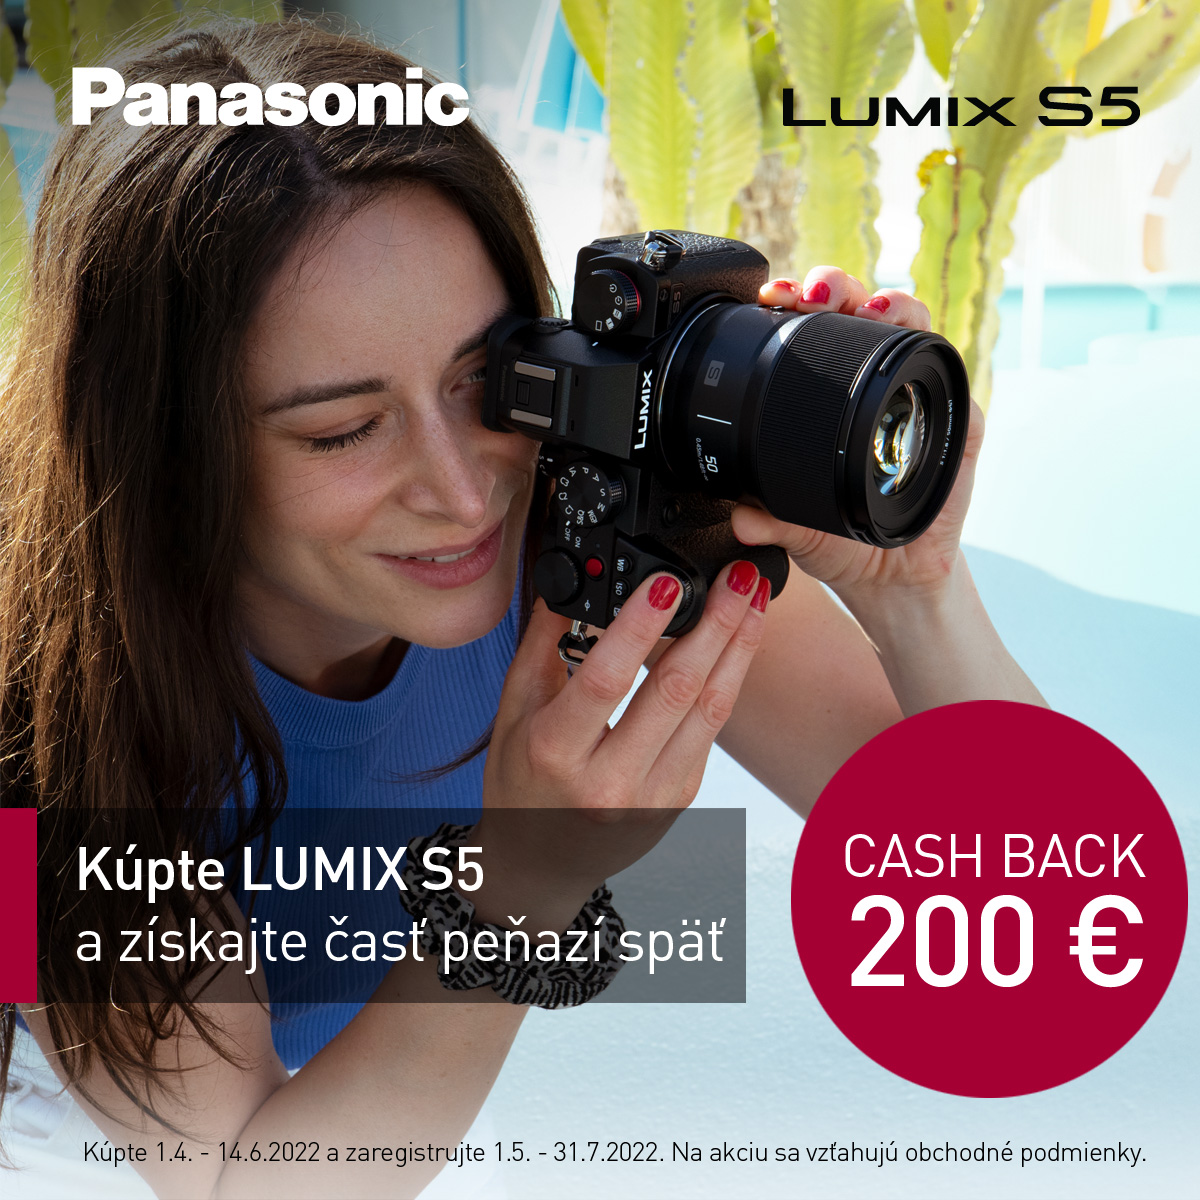 Panasonic Lumix S5 cashback